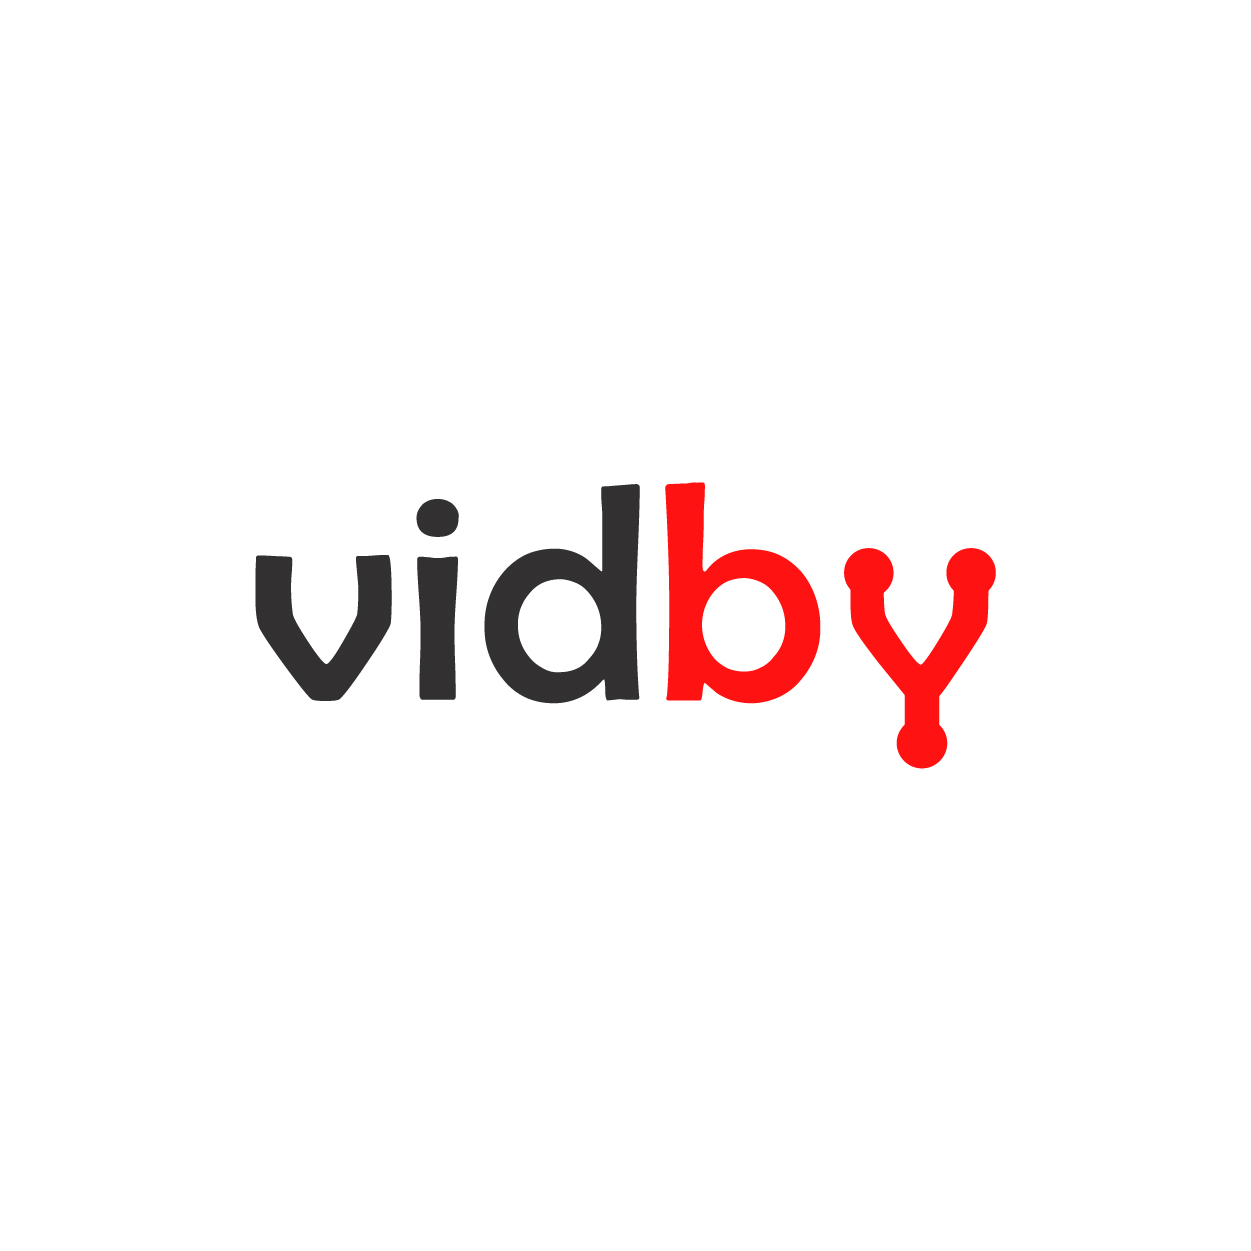 vidby_LinkedIn_Logo_300x300px-01.jpg